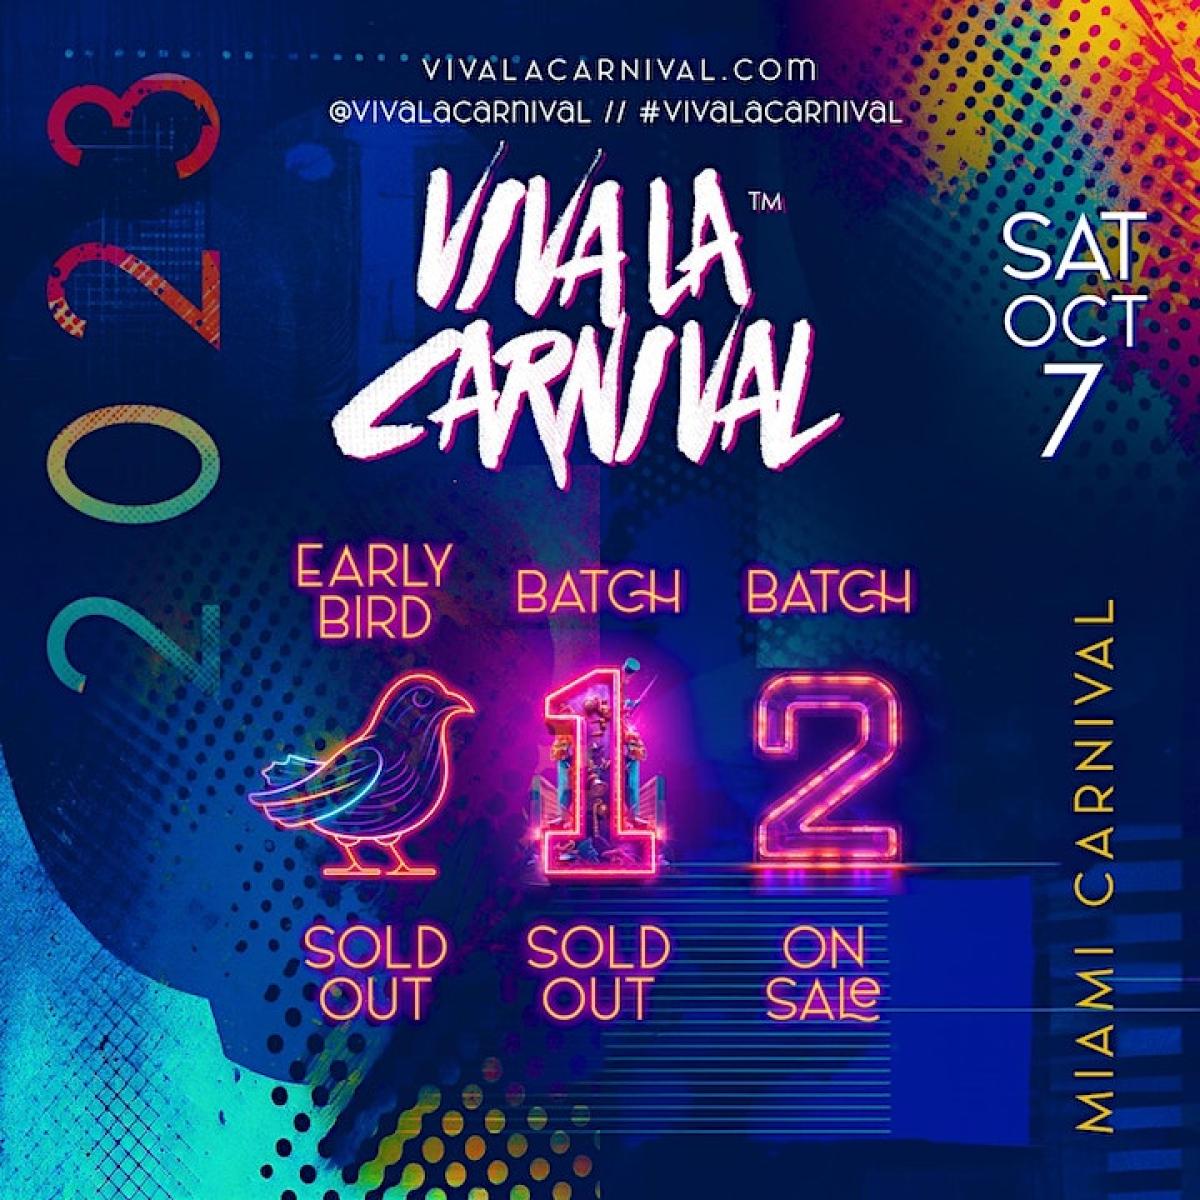 Viva La Carnival flyer or graphic.